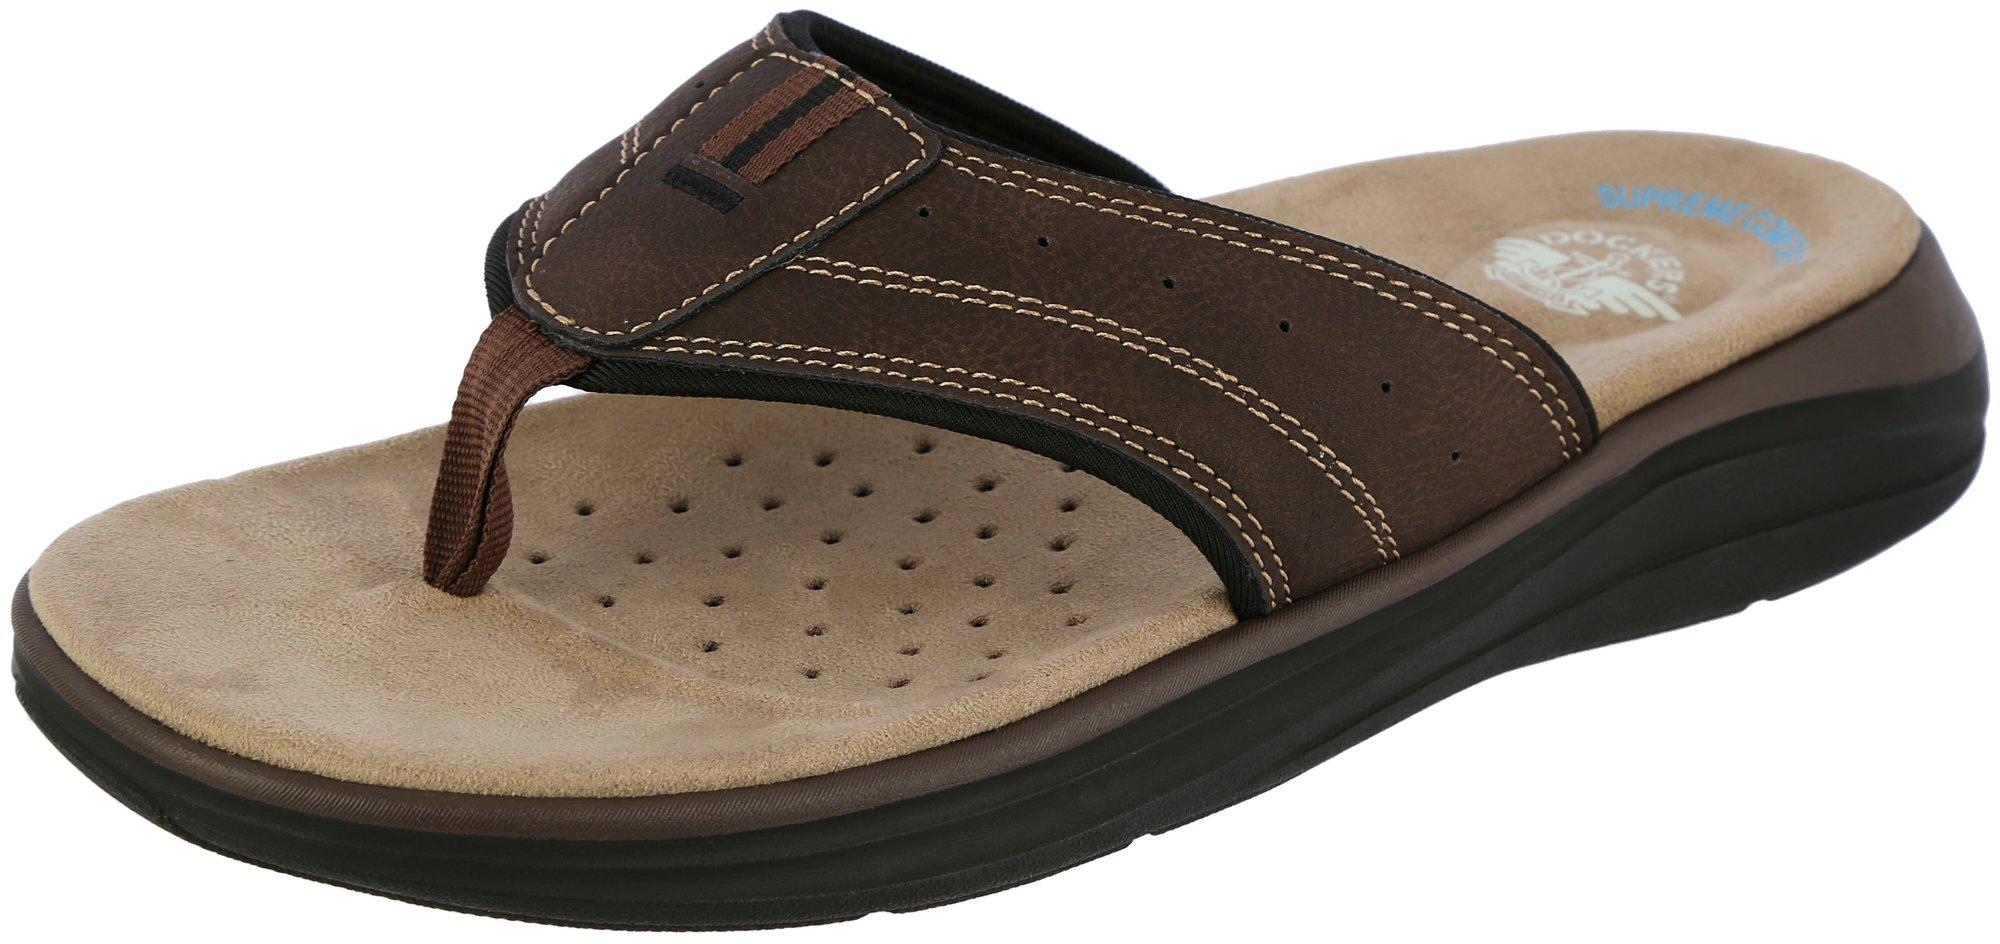 Reel Legends Rebound Flip Flops Thongs Sandals Shoes Molded Rubber Black M  6 W 8